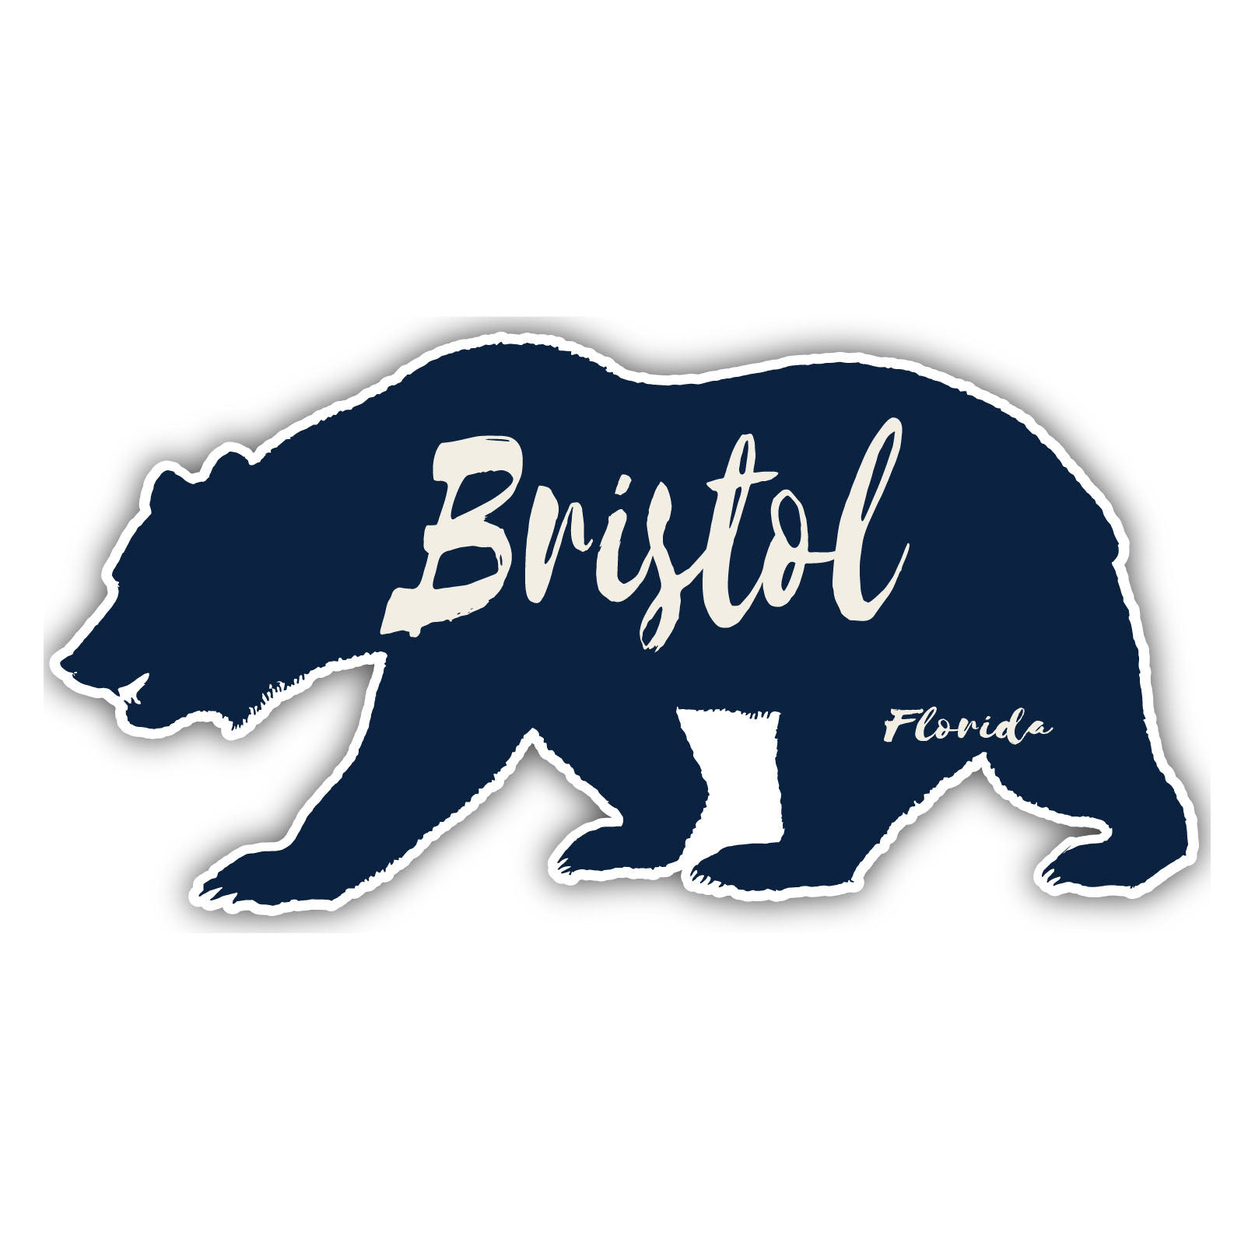 Bristol Florida Souvenir Decorative Stickers (Choose Theme And Size) - Single Unit, 10-Inch, Bear